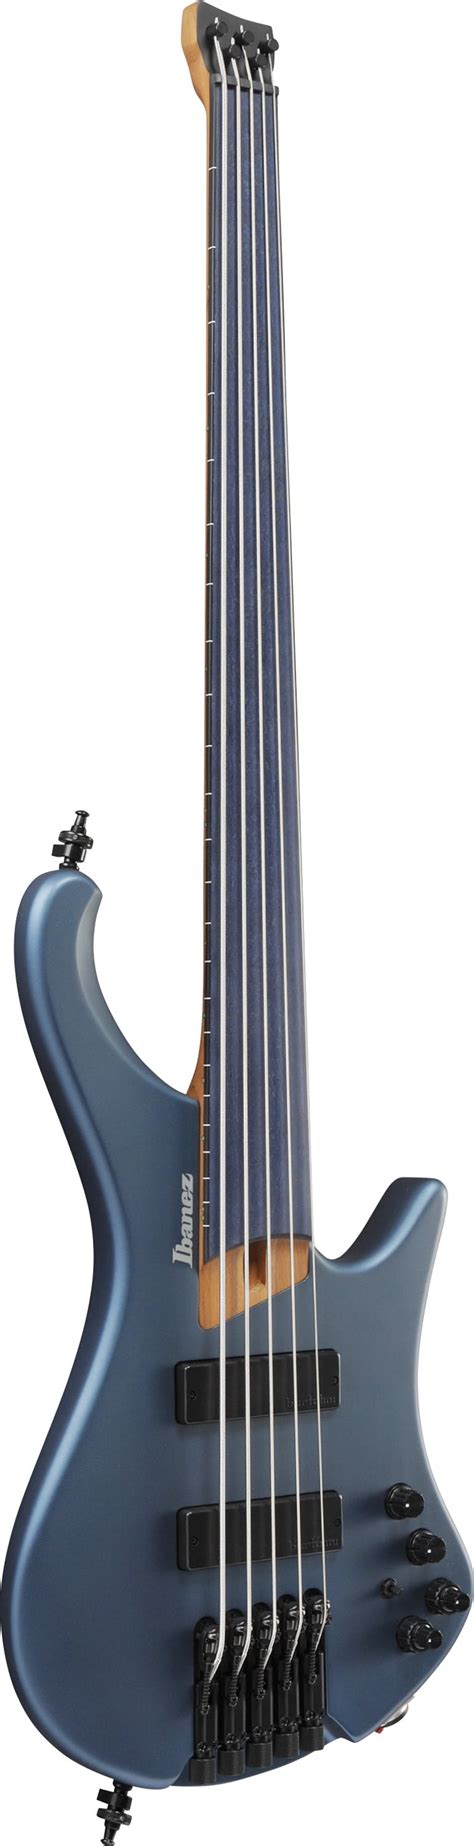 Ibanez Ehb1005f Aom 5 String Headless Fretless Bass Guitar In Arctic